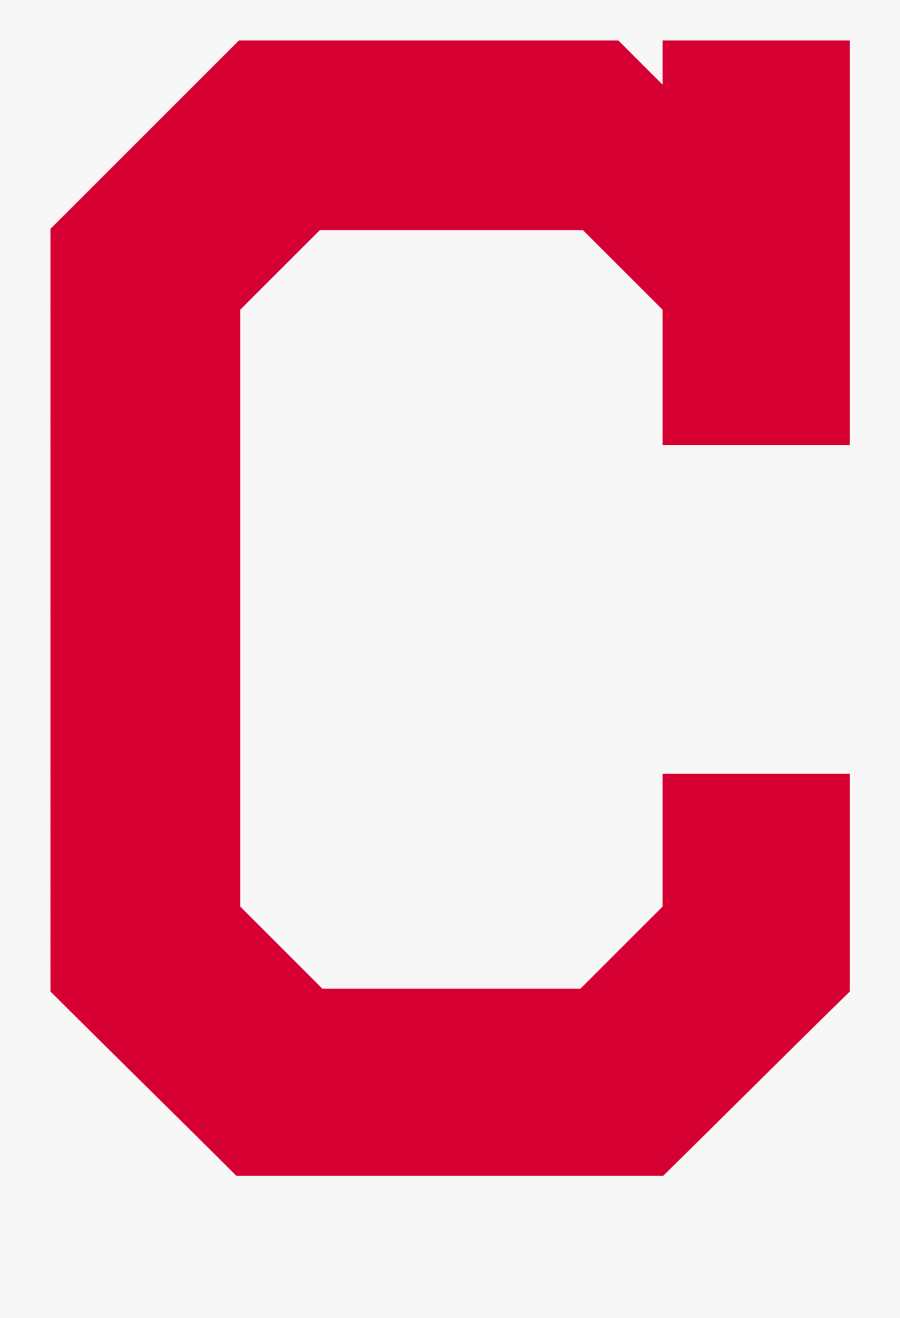 Cleveland Indians Logos Download - Cleveland Indians Logo 2019, Transparent Clipart